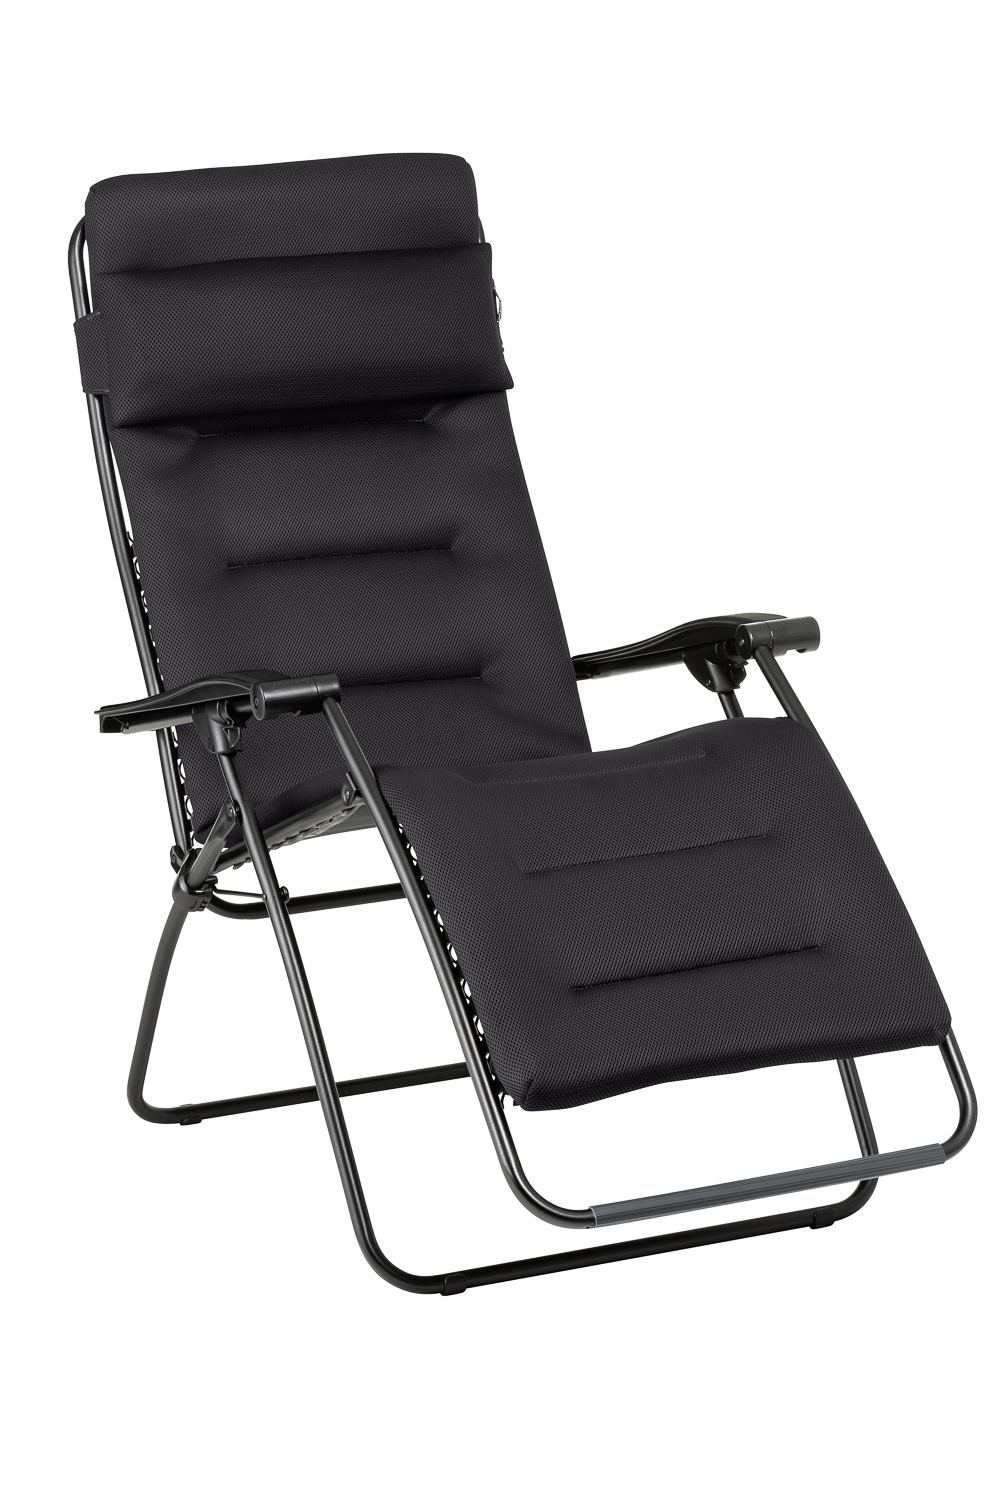 Lafuma Rsx Clip Aircomfort Relaxstoel